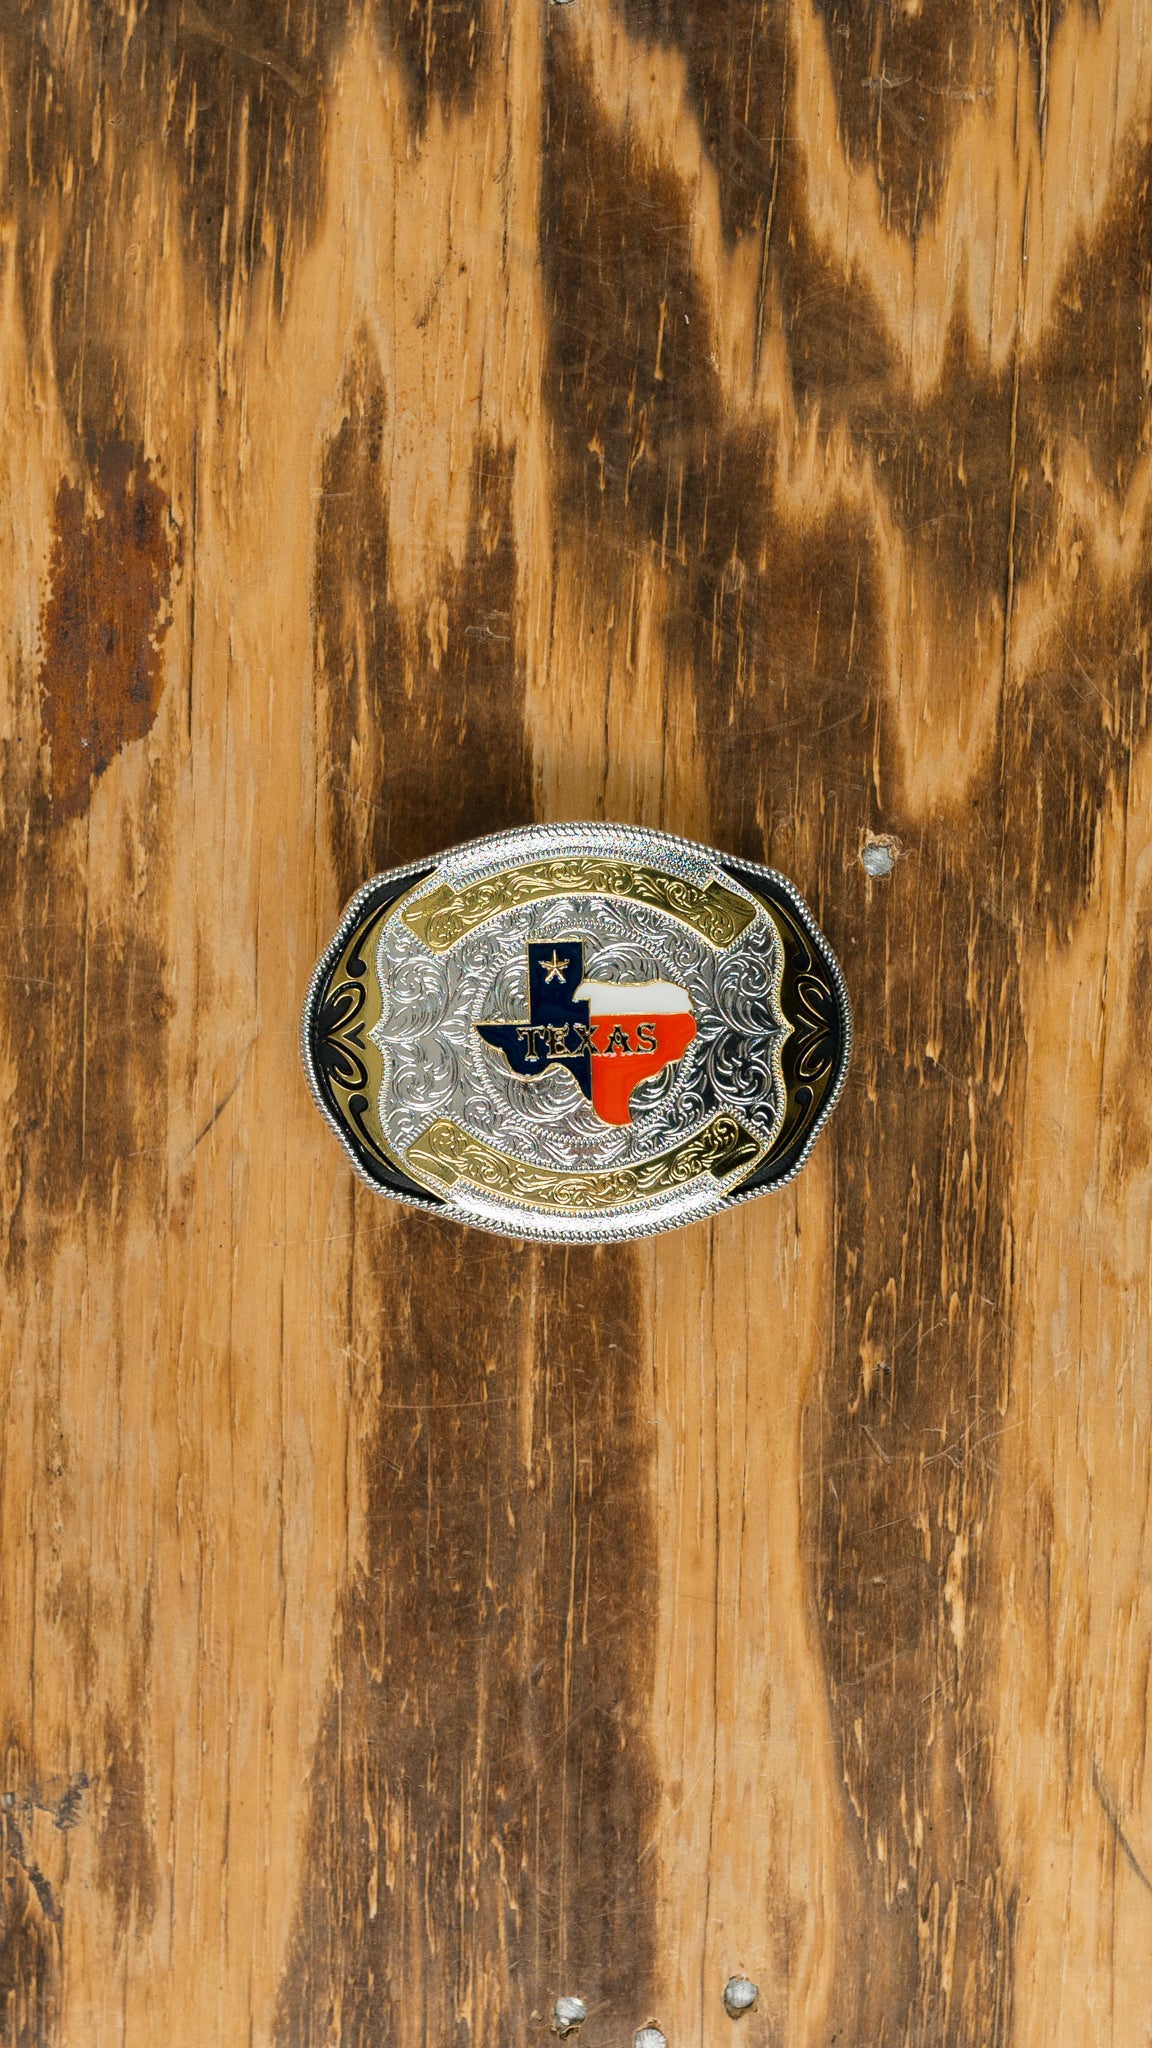 Oval Texas belt buckle